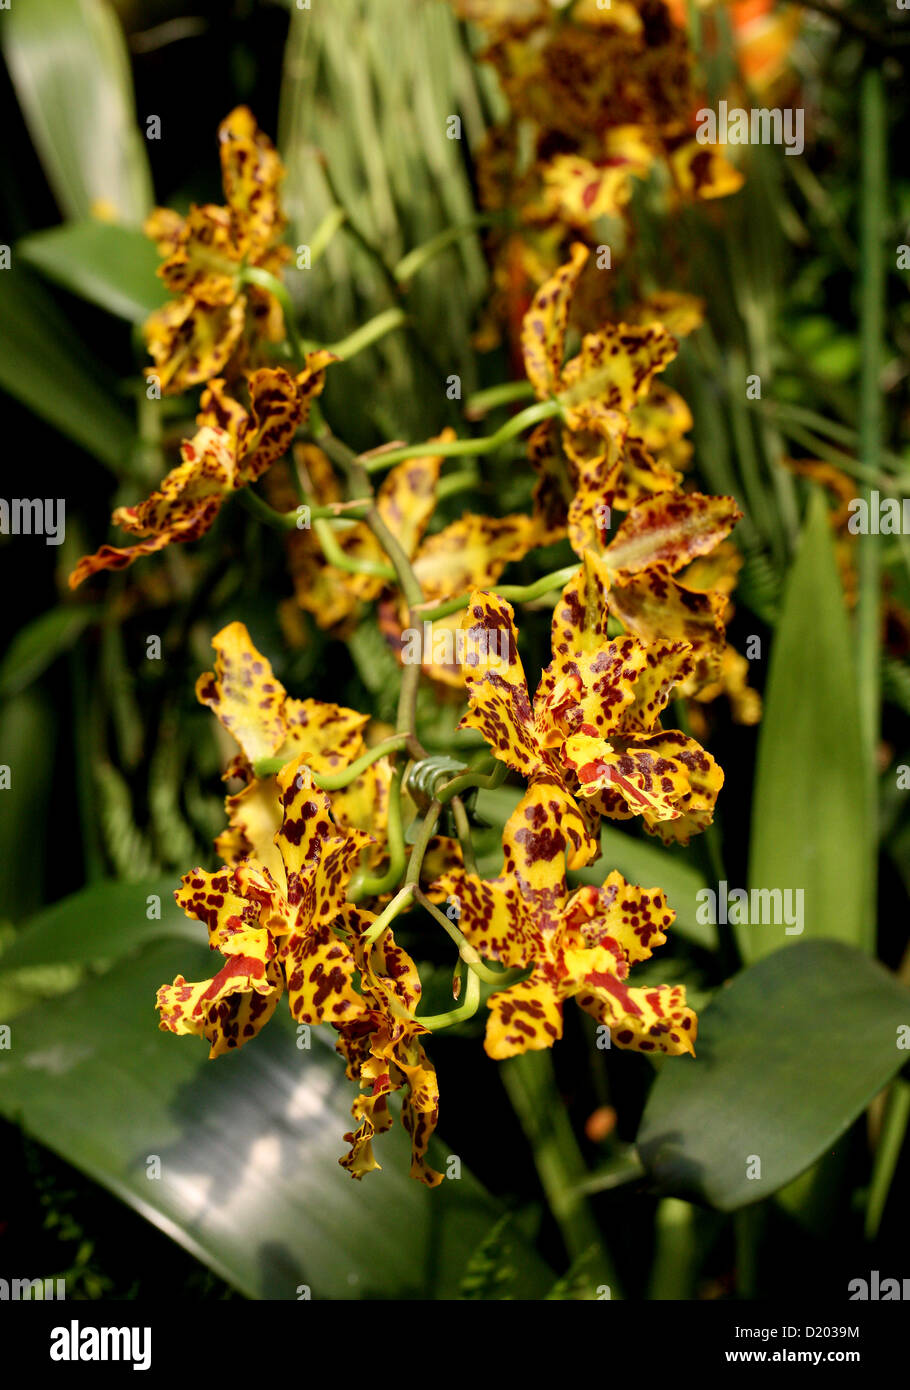 Tiger Orchid, Hybrid Odontocidium 'Hansueli Isler', Odontoglossum Burkhard Holm x Oncidium Tiger Hambuhren, Orchidaceae. Stock Photo